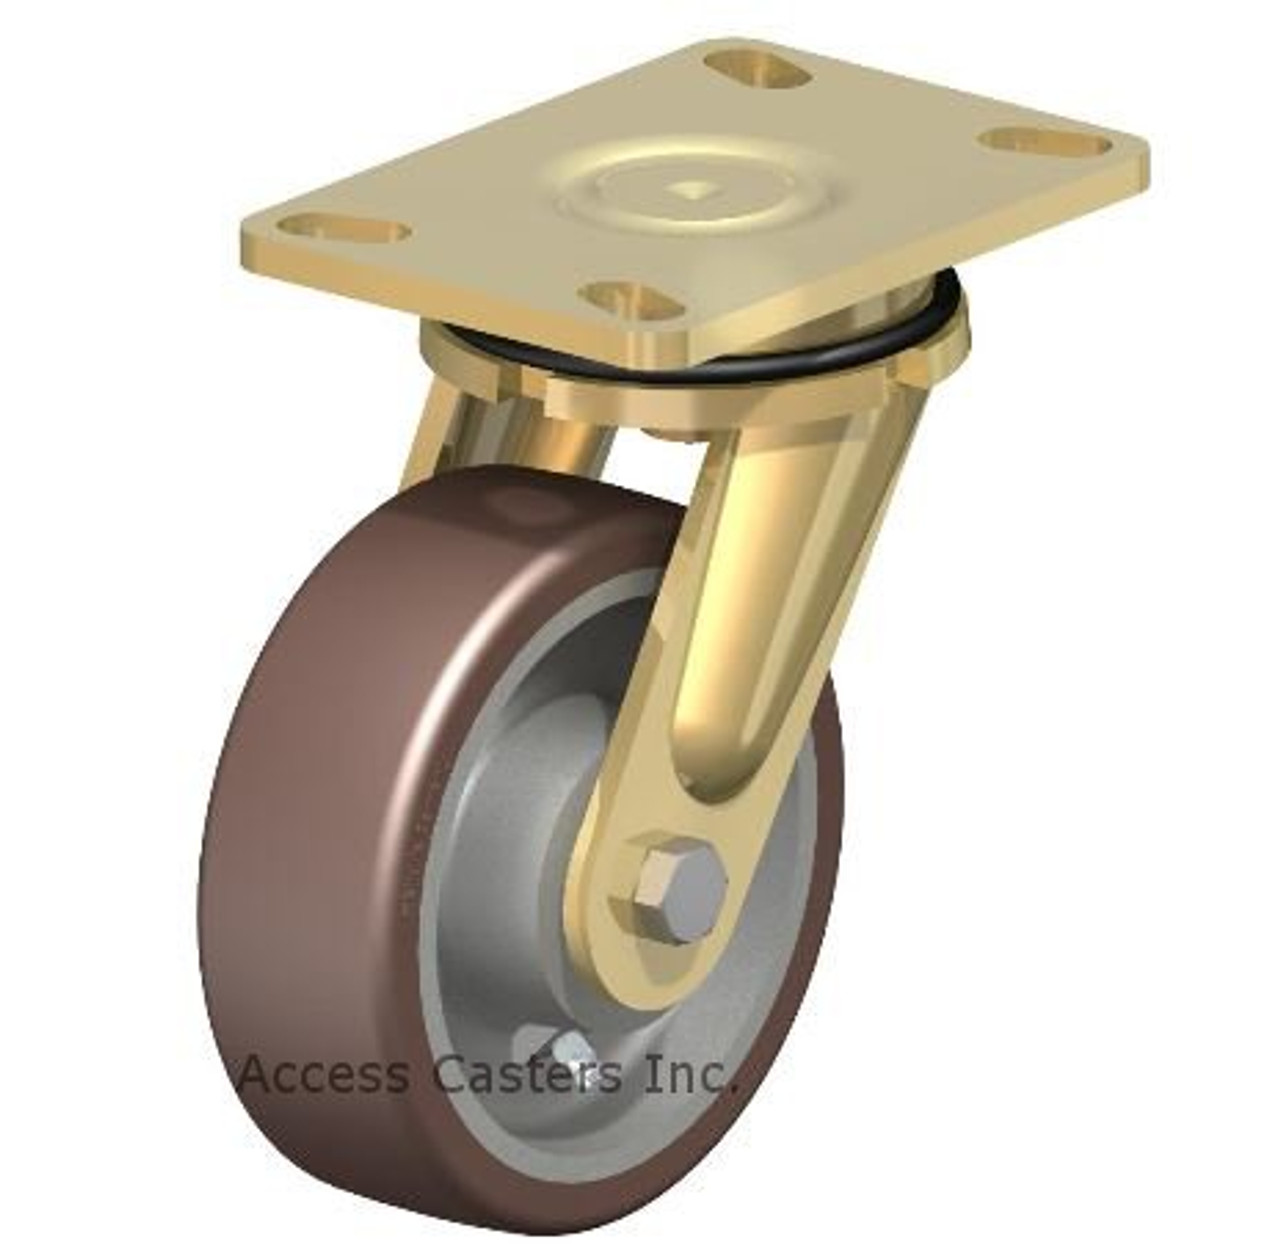 LS-GB 150K-16 Blickle 6" Swivel Caster GB Wheel Plate Ball Bearing